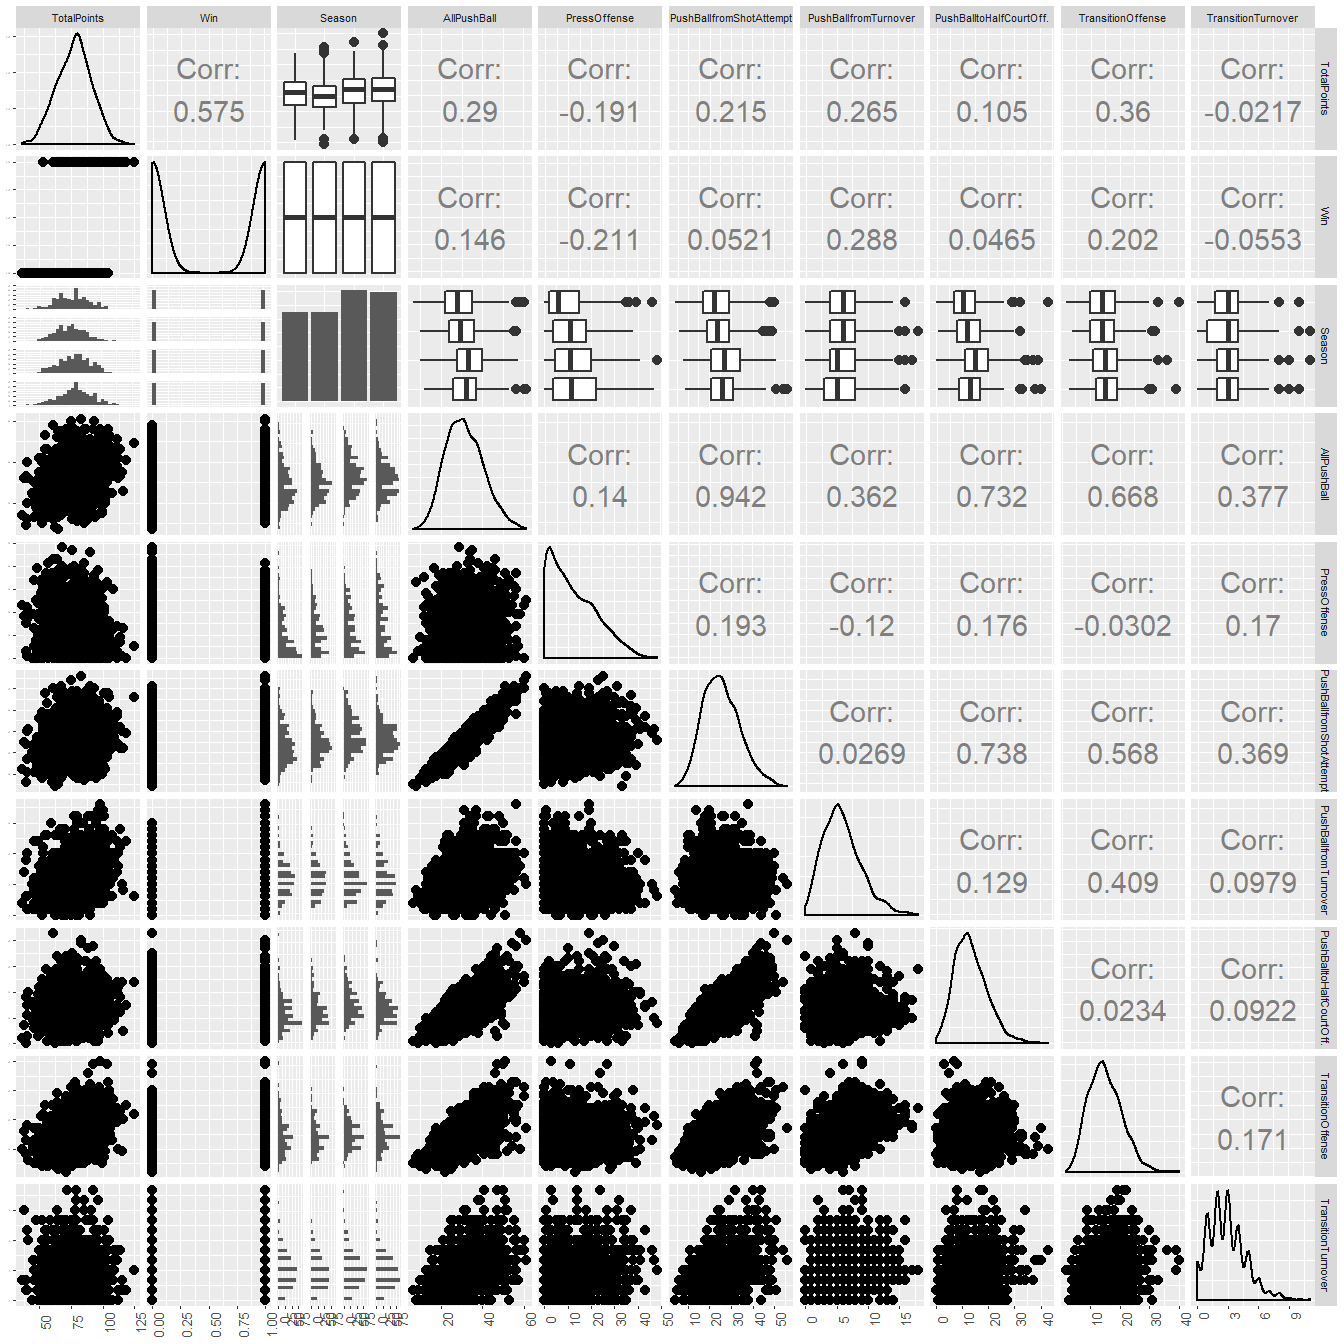 Plot Matrix of the Transitions Dataset